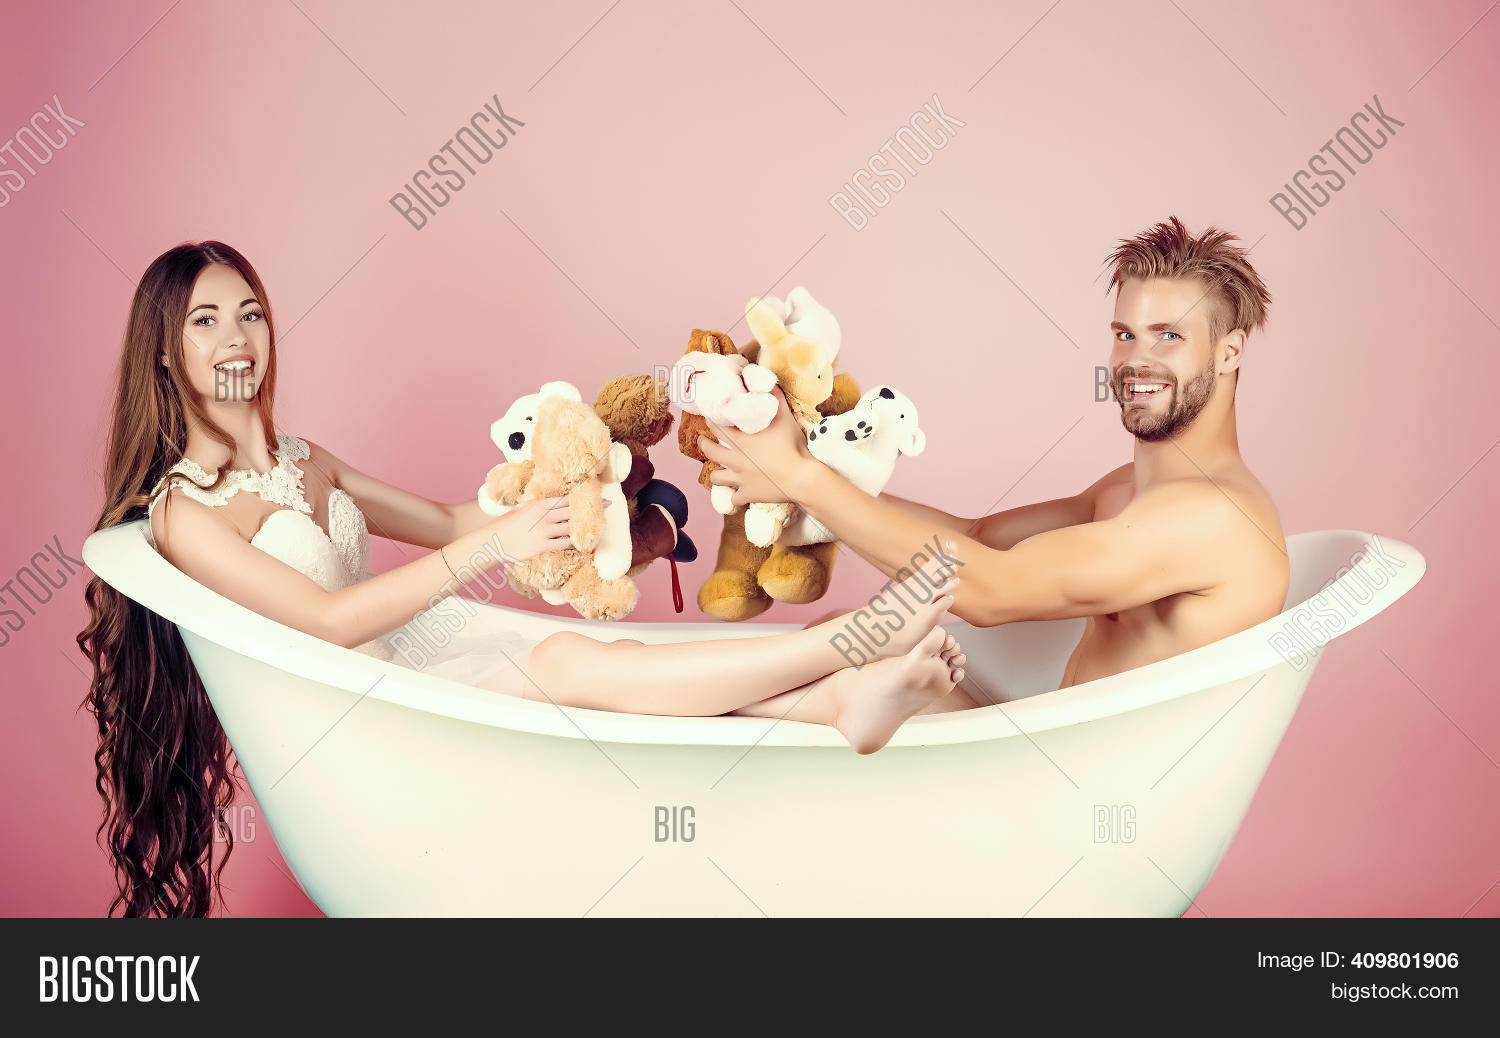 bronnie smith add how to take a bath with your girlfriend photo